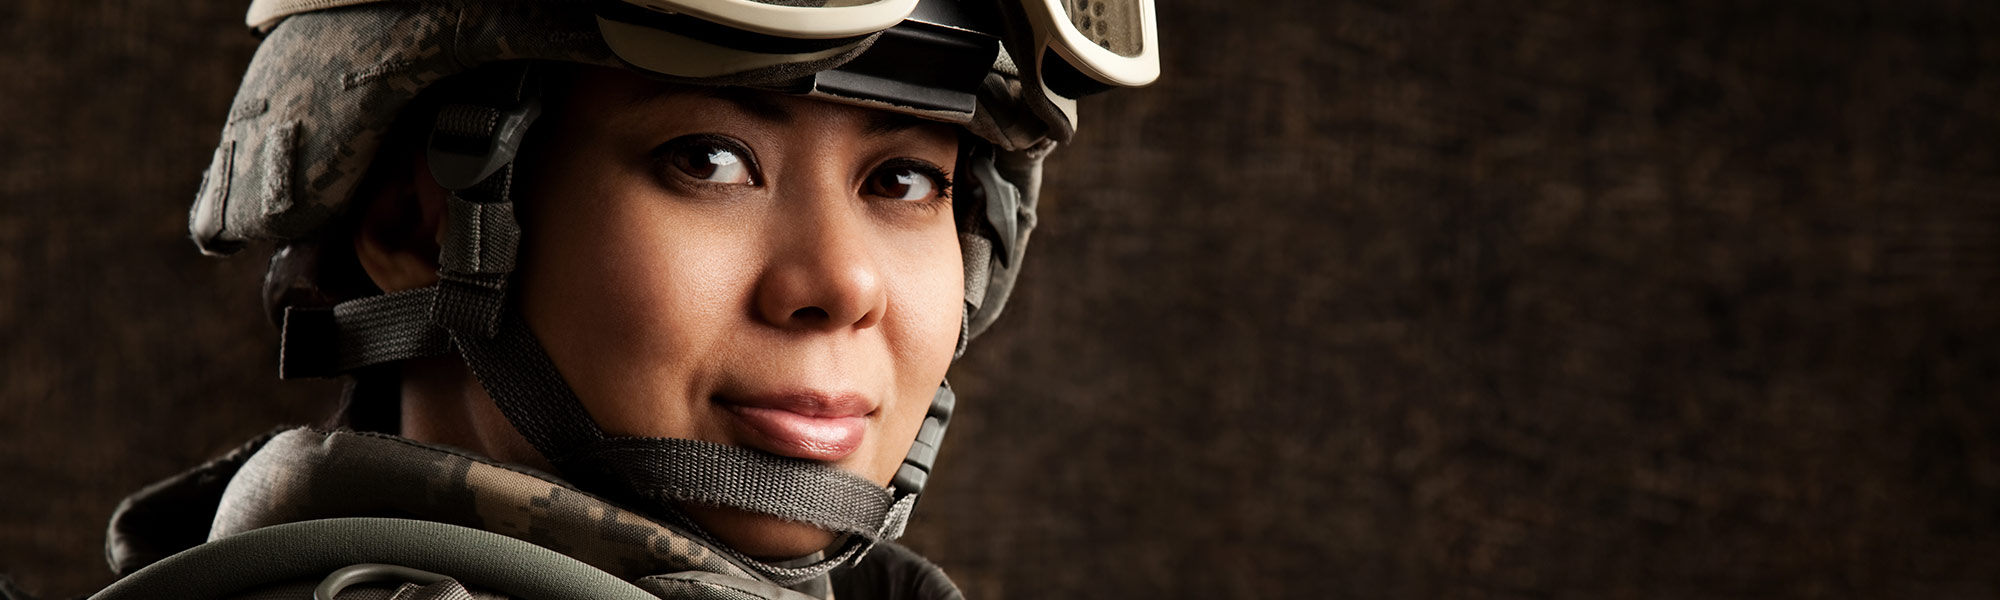 Military Women - Federally Employed Women